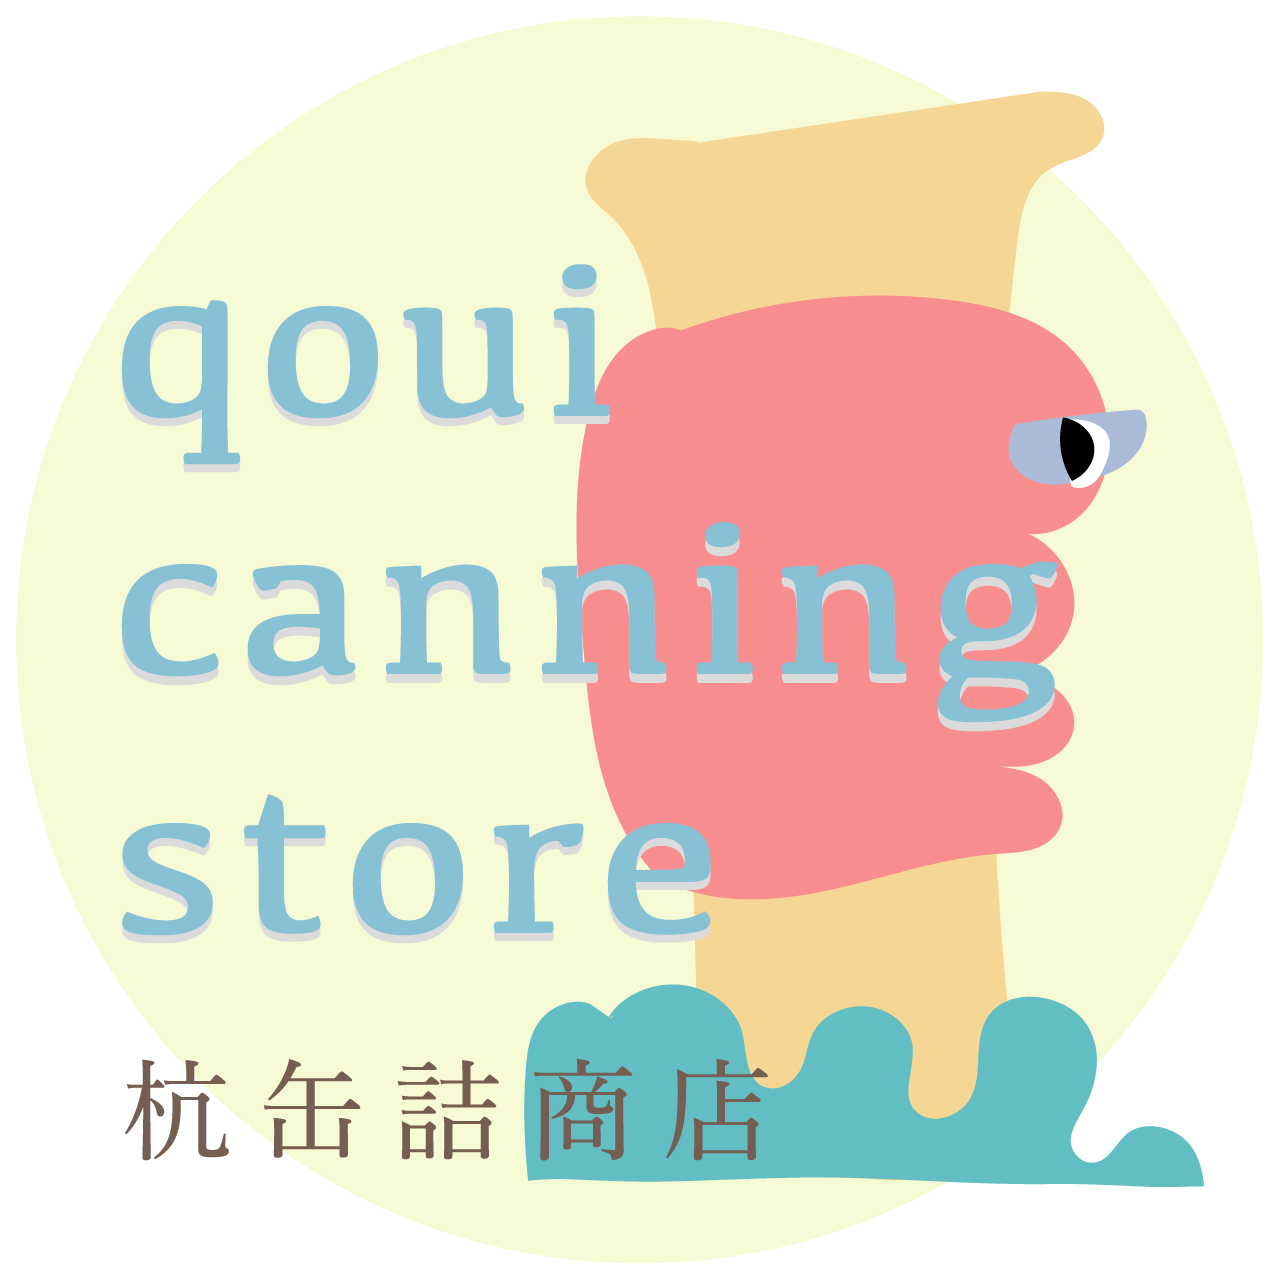 qoui canning store